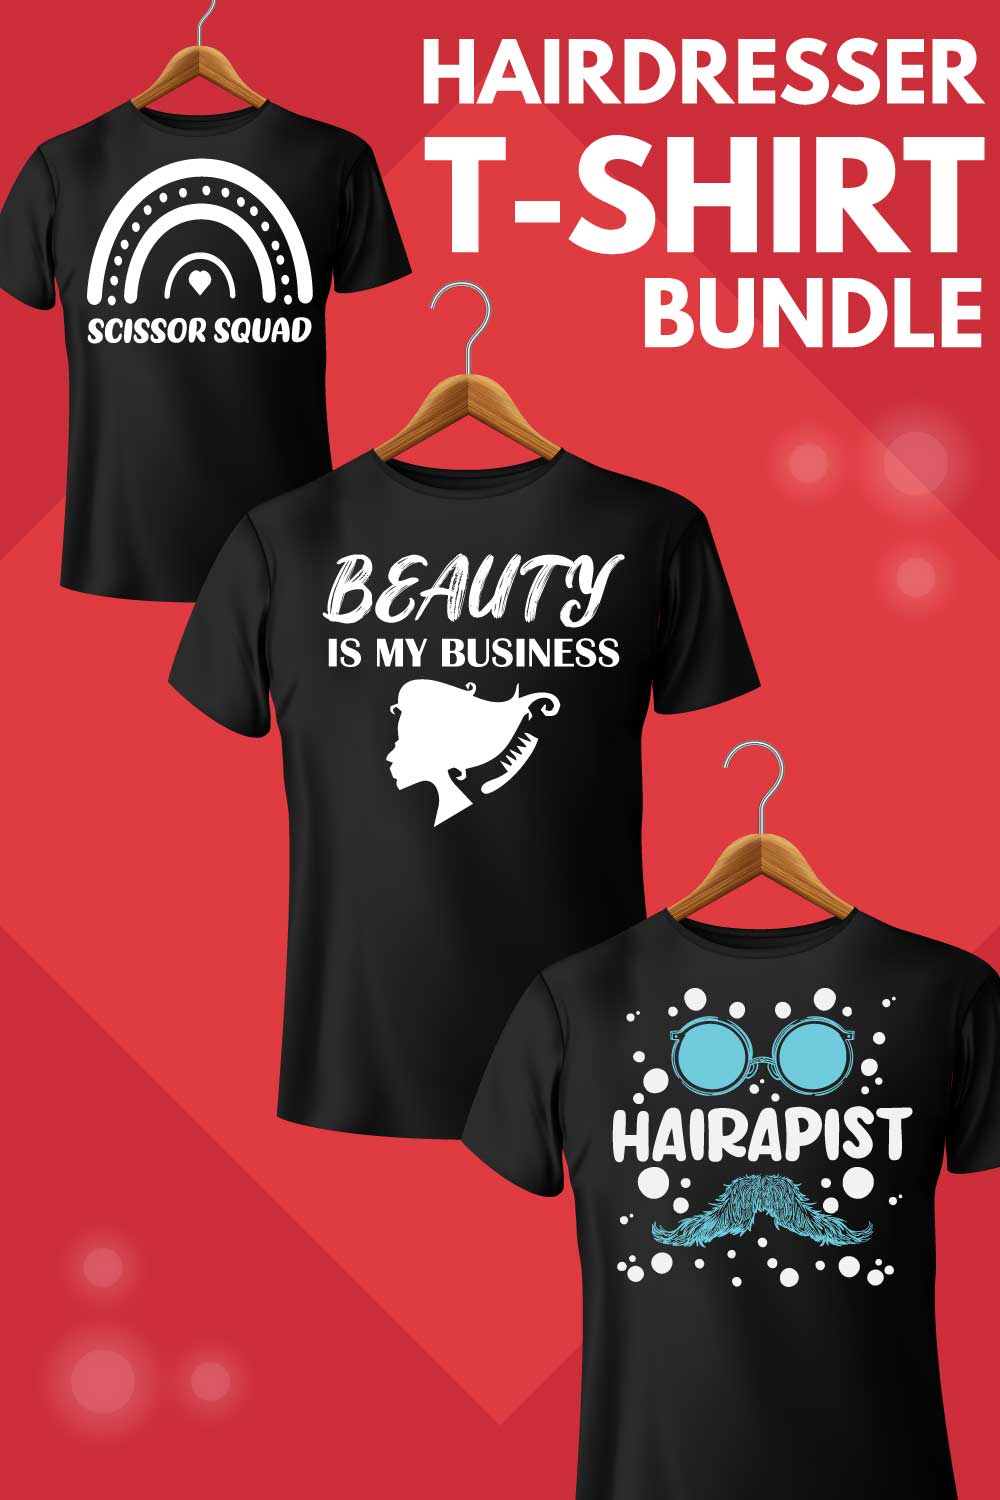 5 Hairdresser t-shirt designs bundle pinterest preview image.